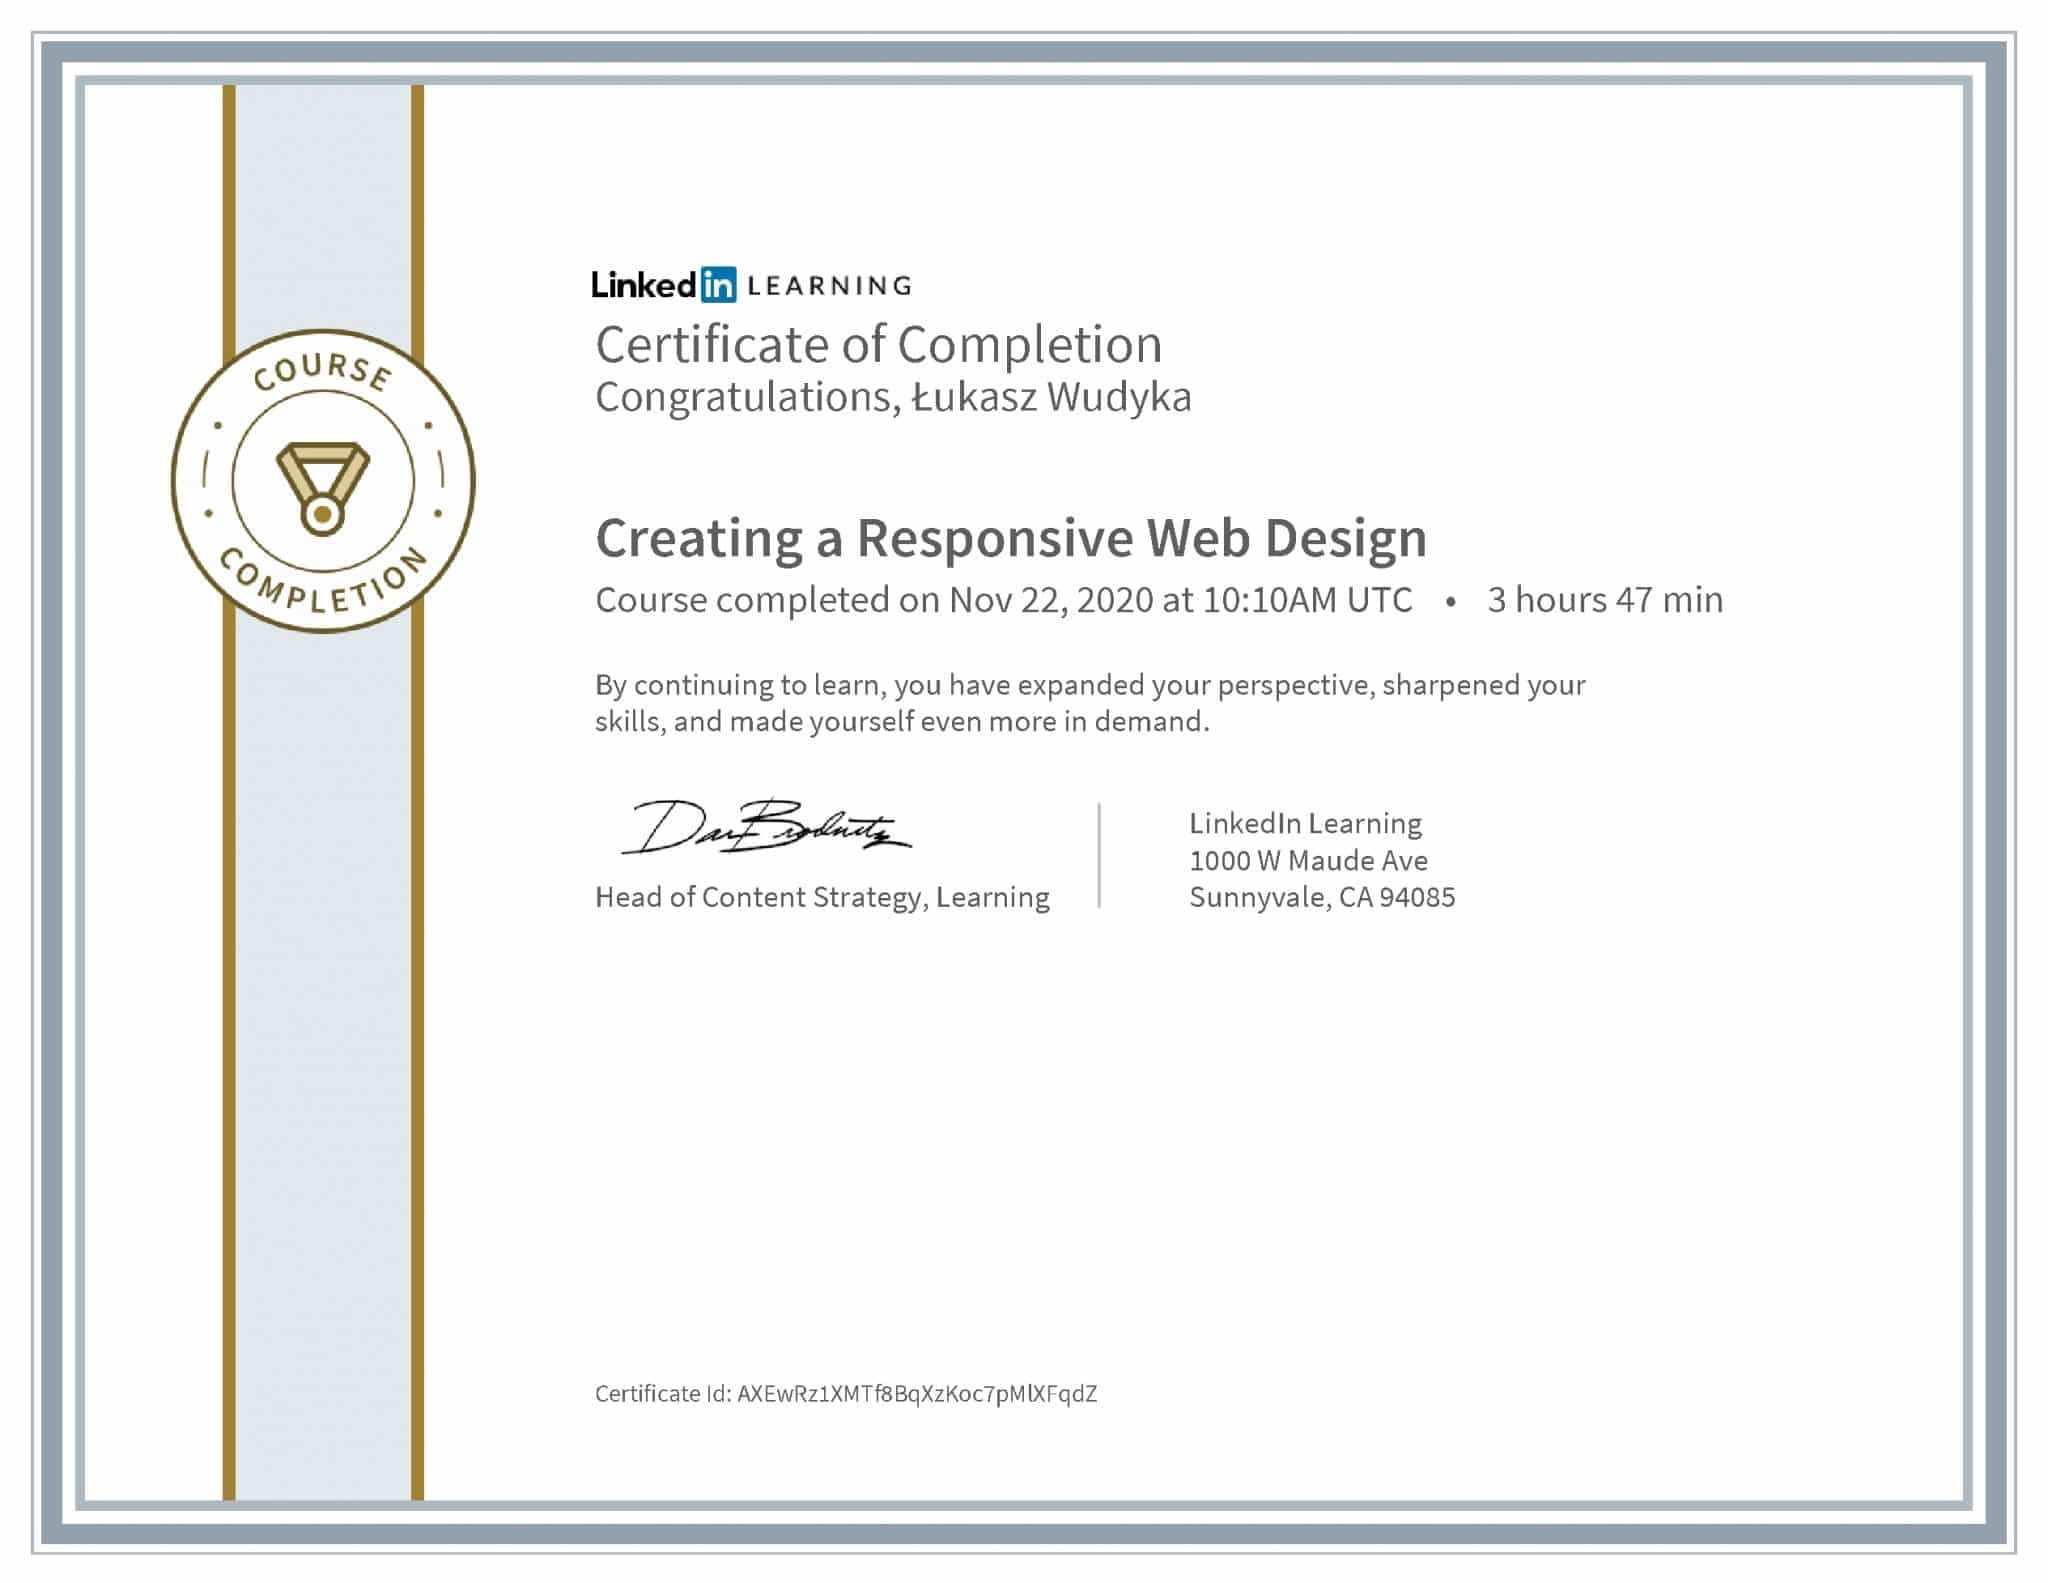 Łukasz Wudyka certyfikat LinkedIn Creating a Responsive Web Design